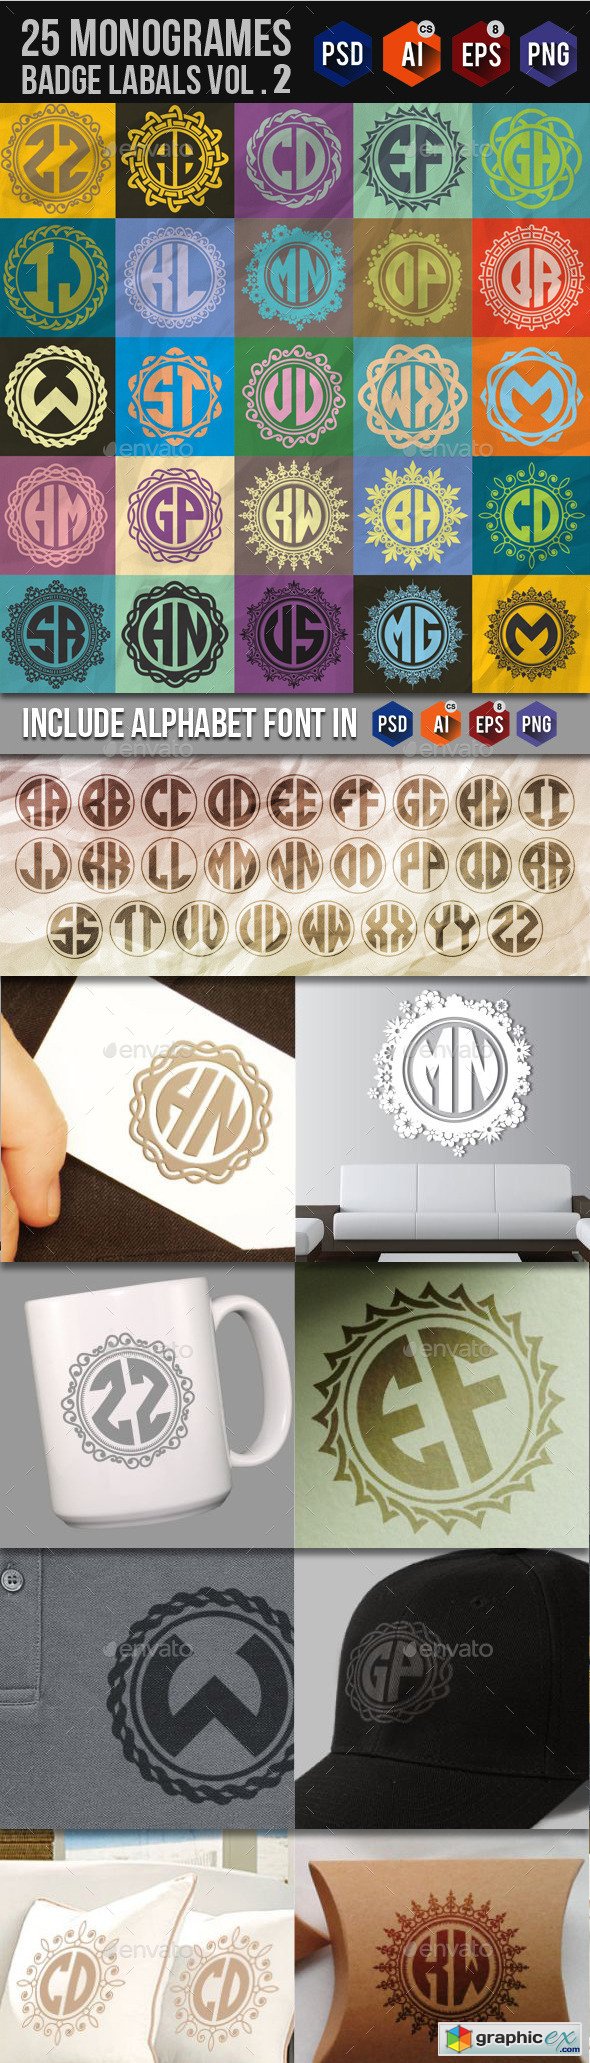 25 Monogrames Badge Labals With Alphabet v2